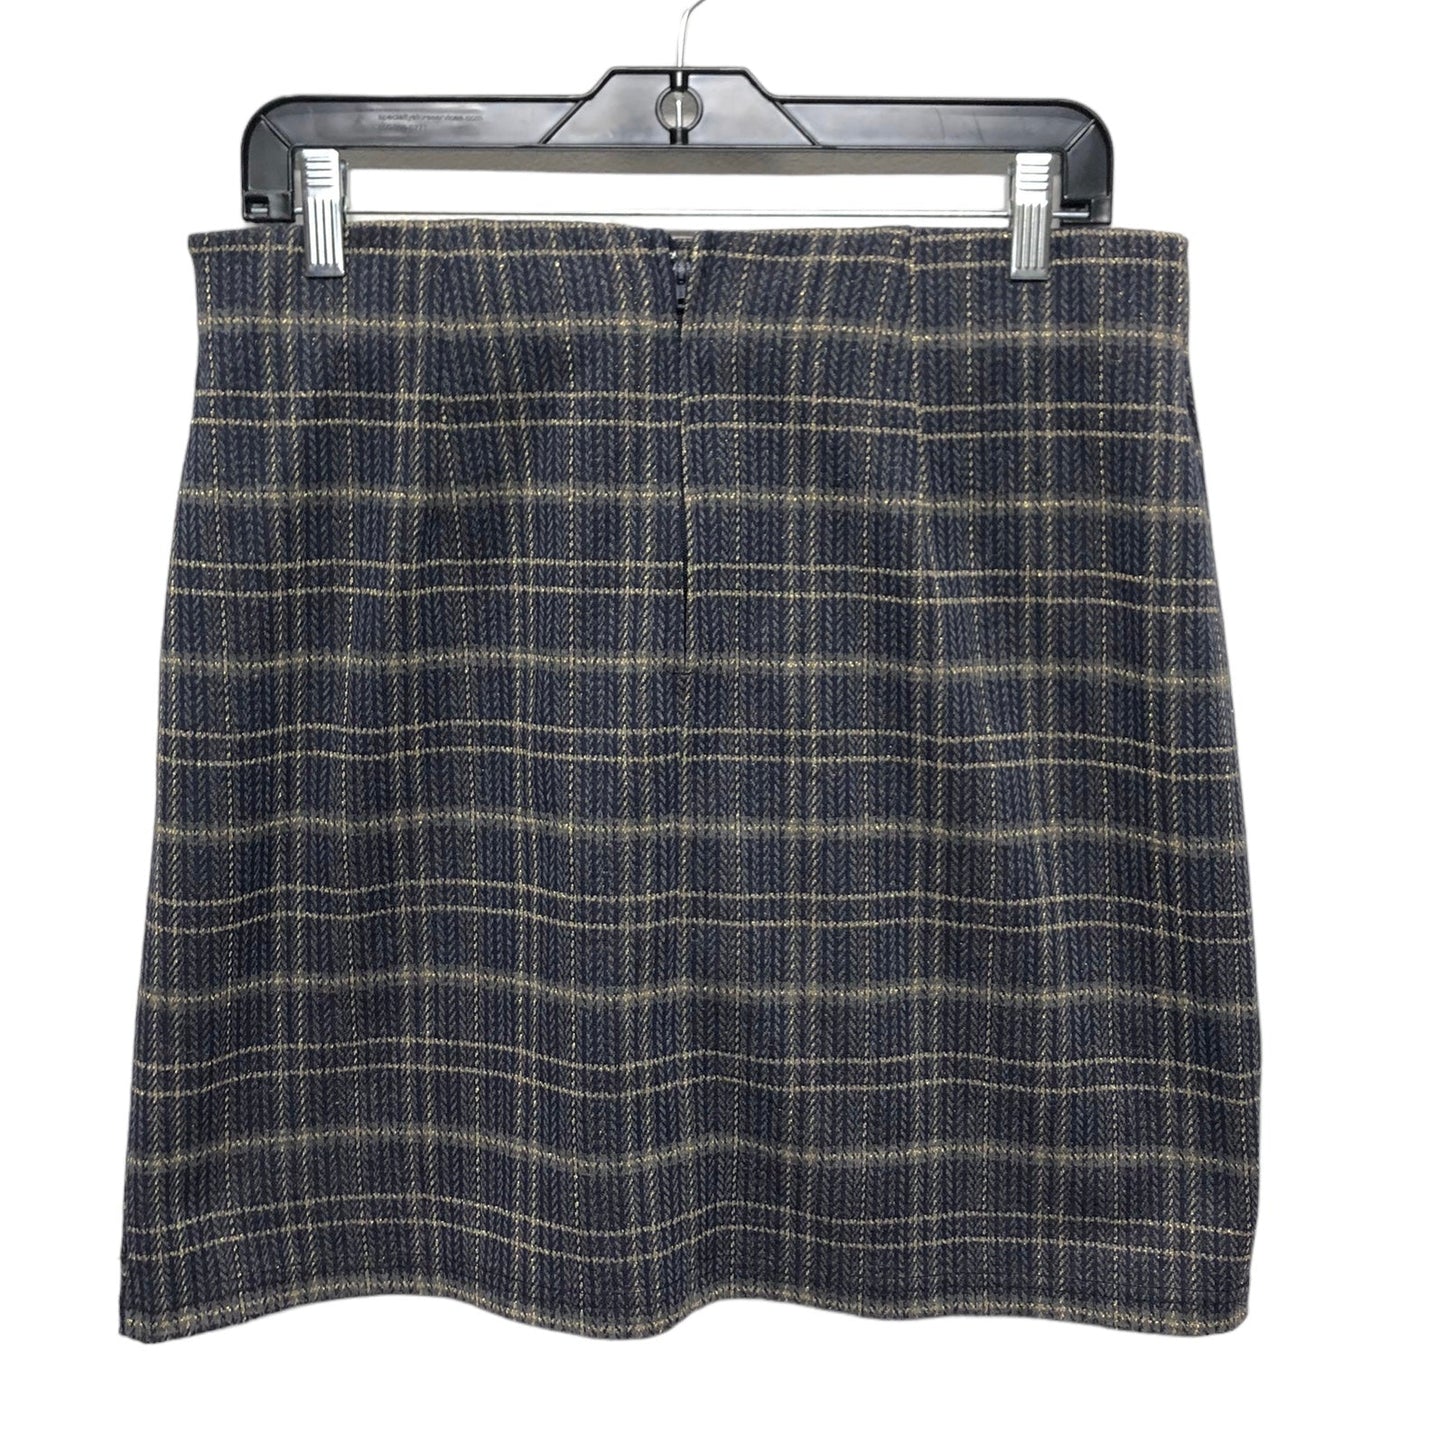 Skirt Mini & Short By Modcloth  Size: L